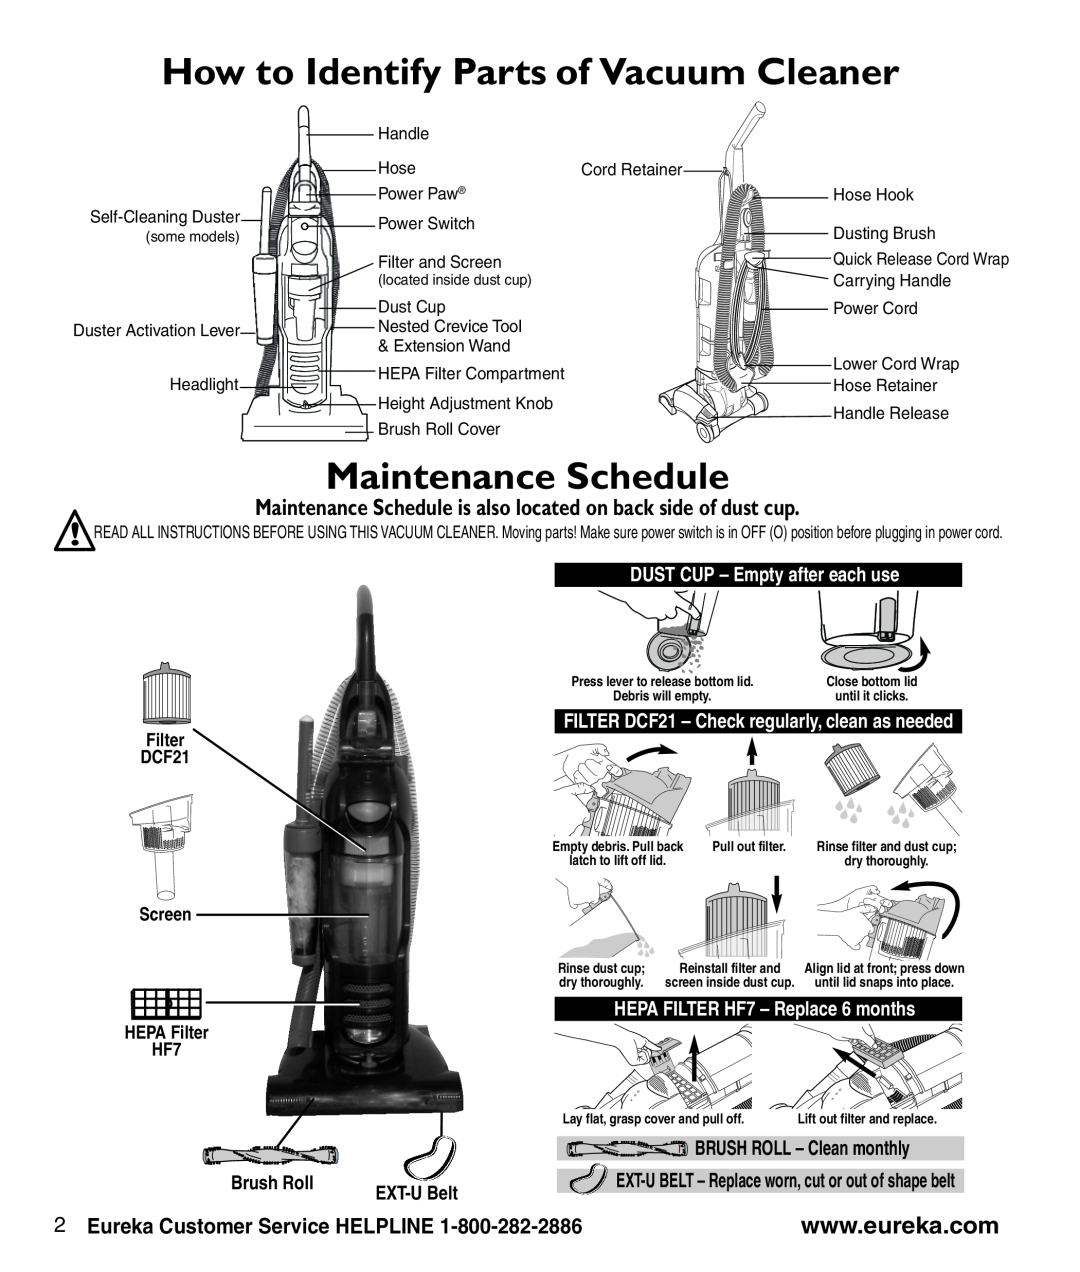 Eureka 3270 Series manual How to Identify Parts of Vacuum Cleaner, Maintenance Schedule, Eureka Customer Service HELPLINE 